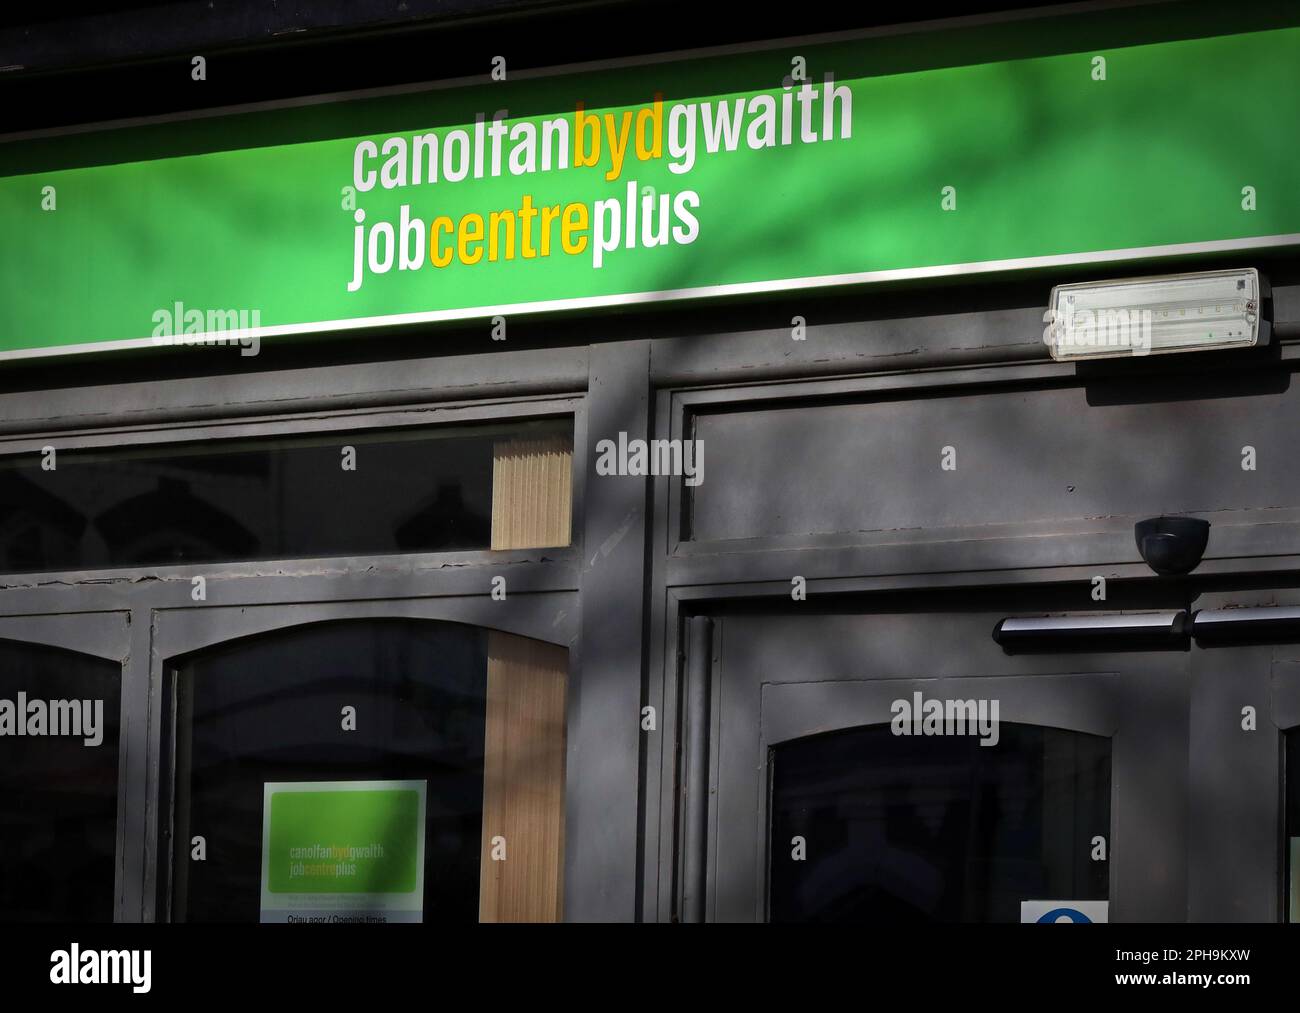 JobCentrePlus - Job Centre Plus - CanolfanBydGwaith - Canolfan Byd Gwaith at 29-31 Stryd y Capel, 29 – 31 Chapel St, Llandudno, Wales, LL30 2SS Stock Photo